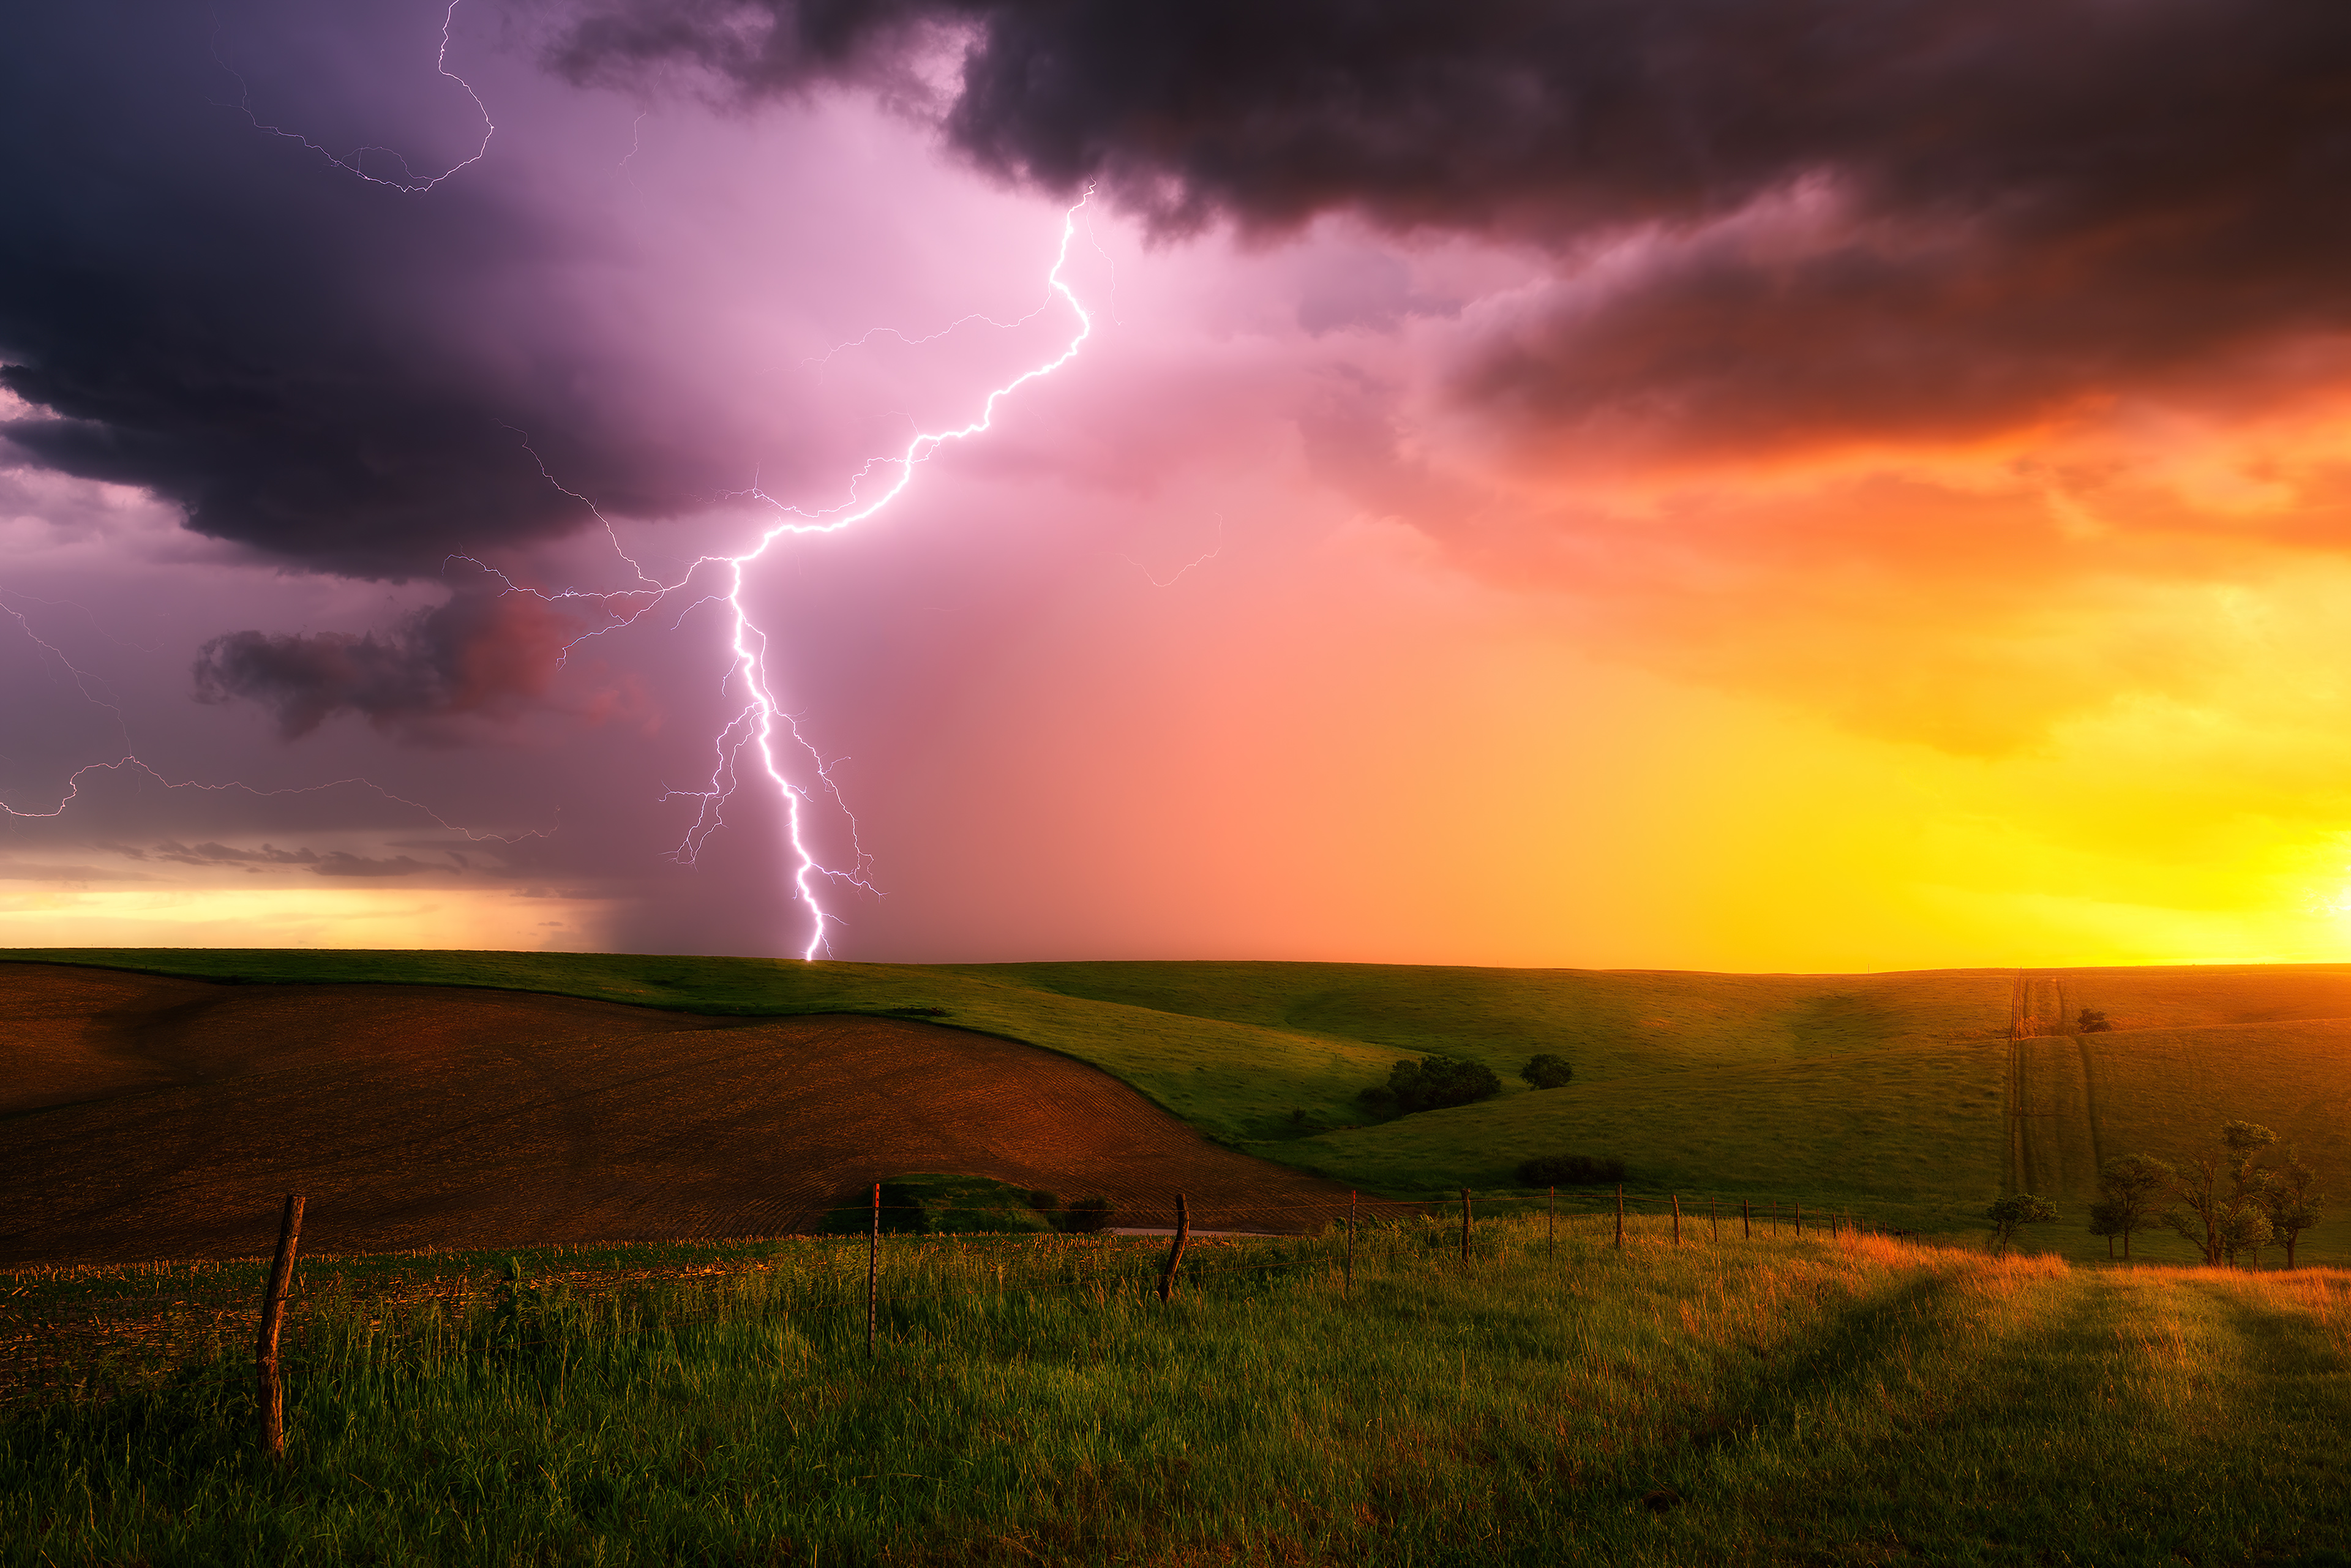 Thunderstorm Lightning Bolt Striking Down At Sunset In Nebraska 4k, HD Nature, 4k Wallpaper, Image, Background, Photo and Picture